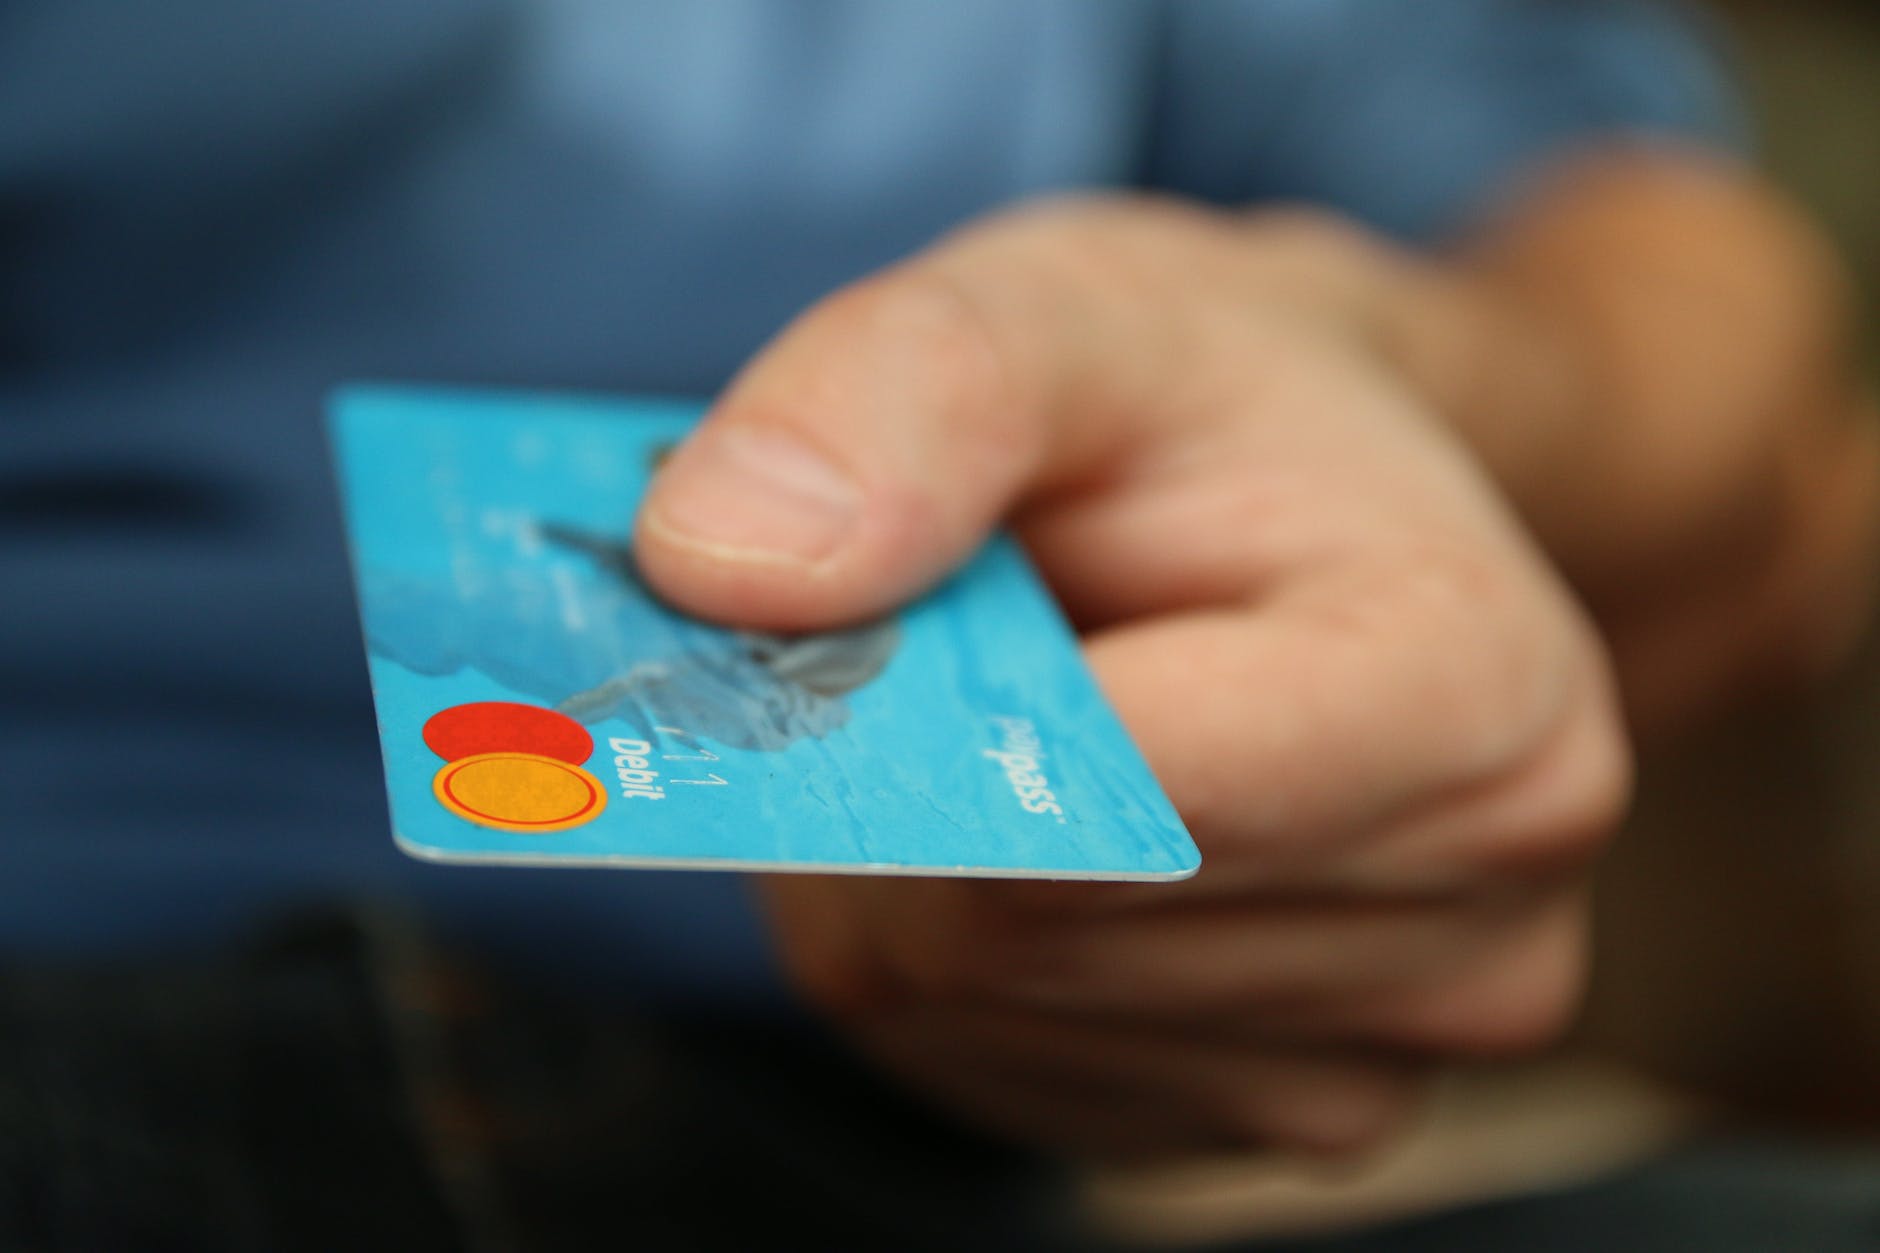 person holding debit card